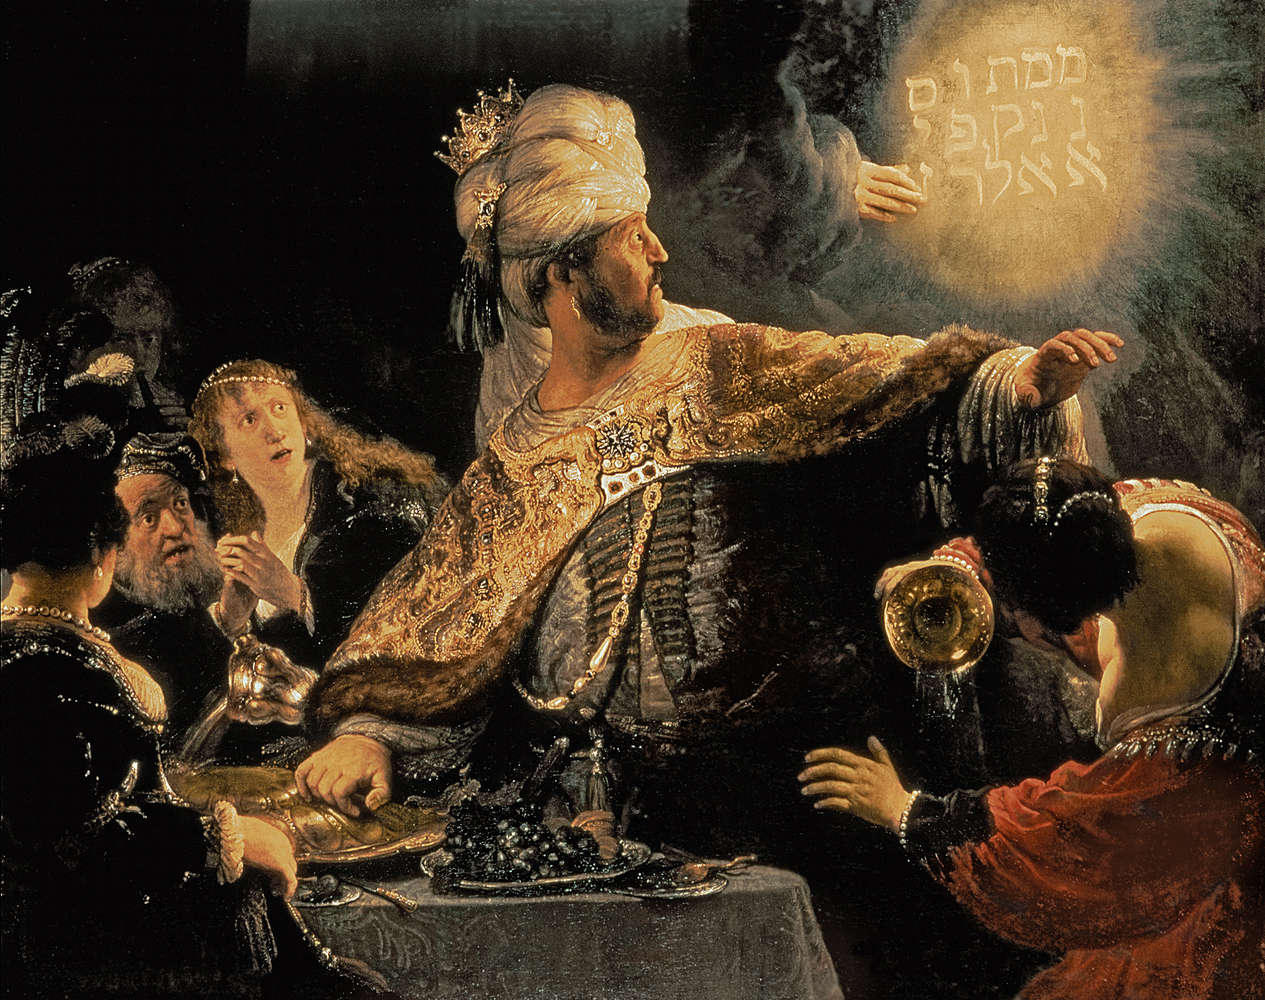             Fototapete "Belshazzar's Fest" von Rembrandt van Rijn
        